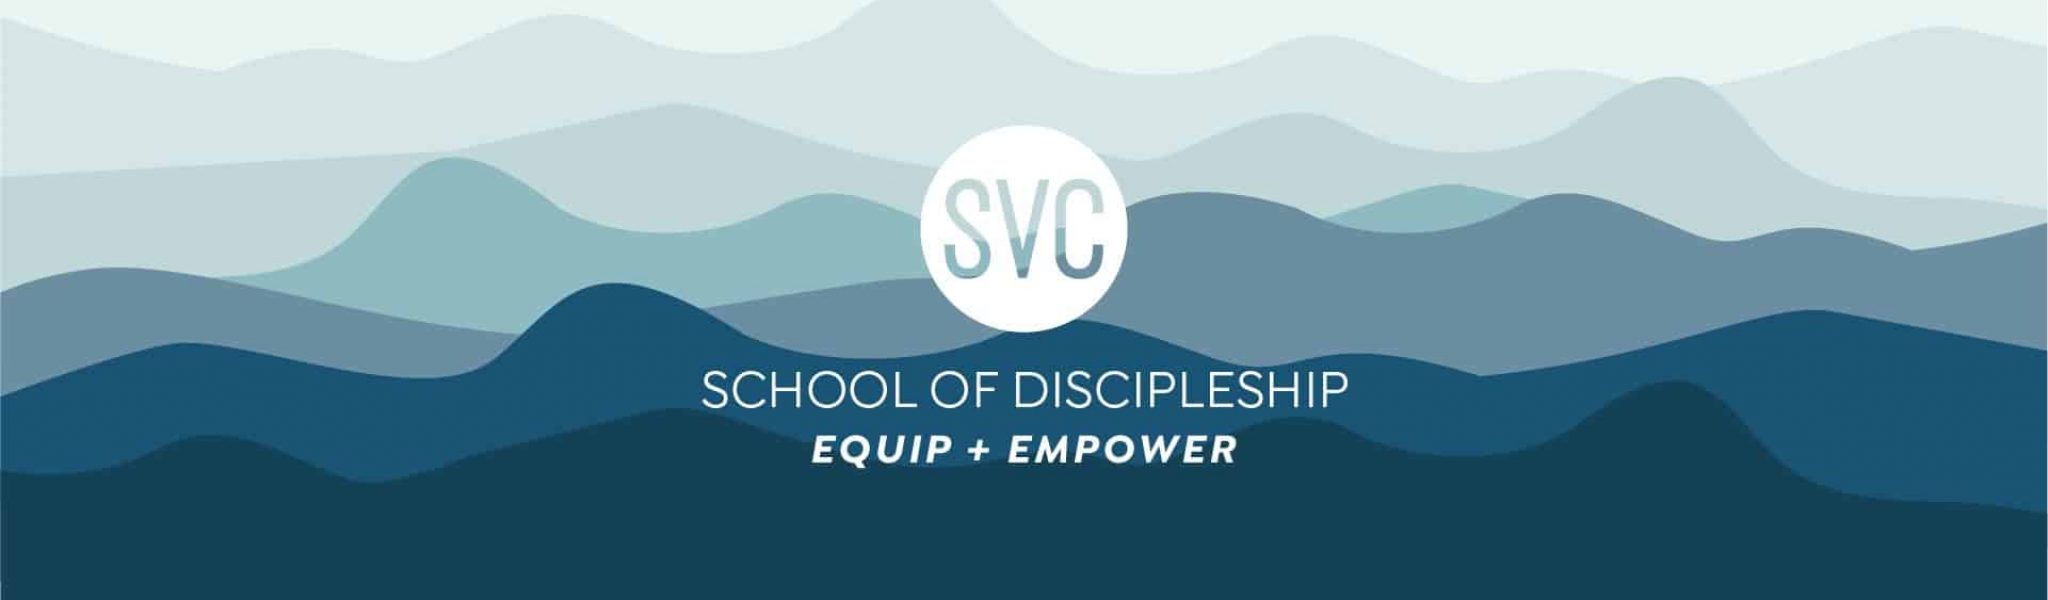 banner_svc-school-of-discipleship-09-09